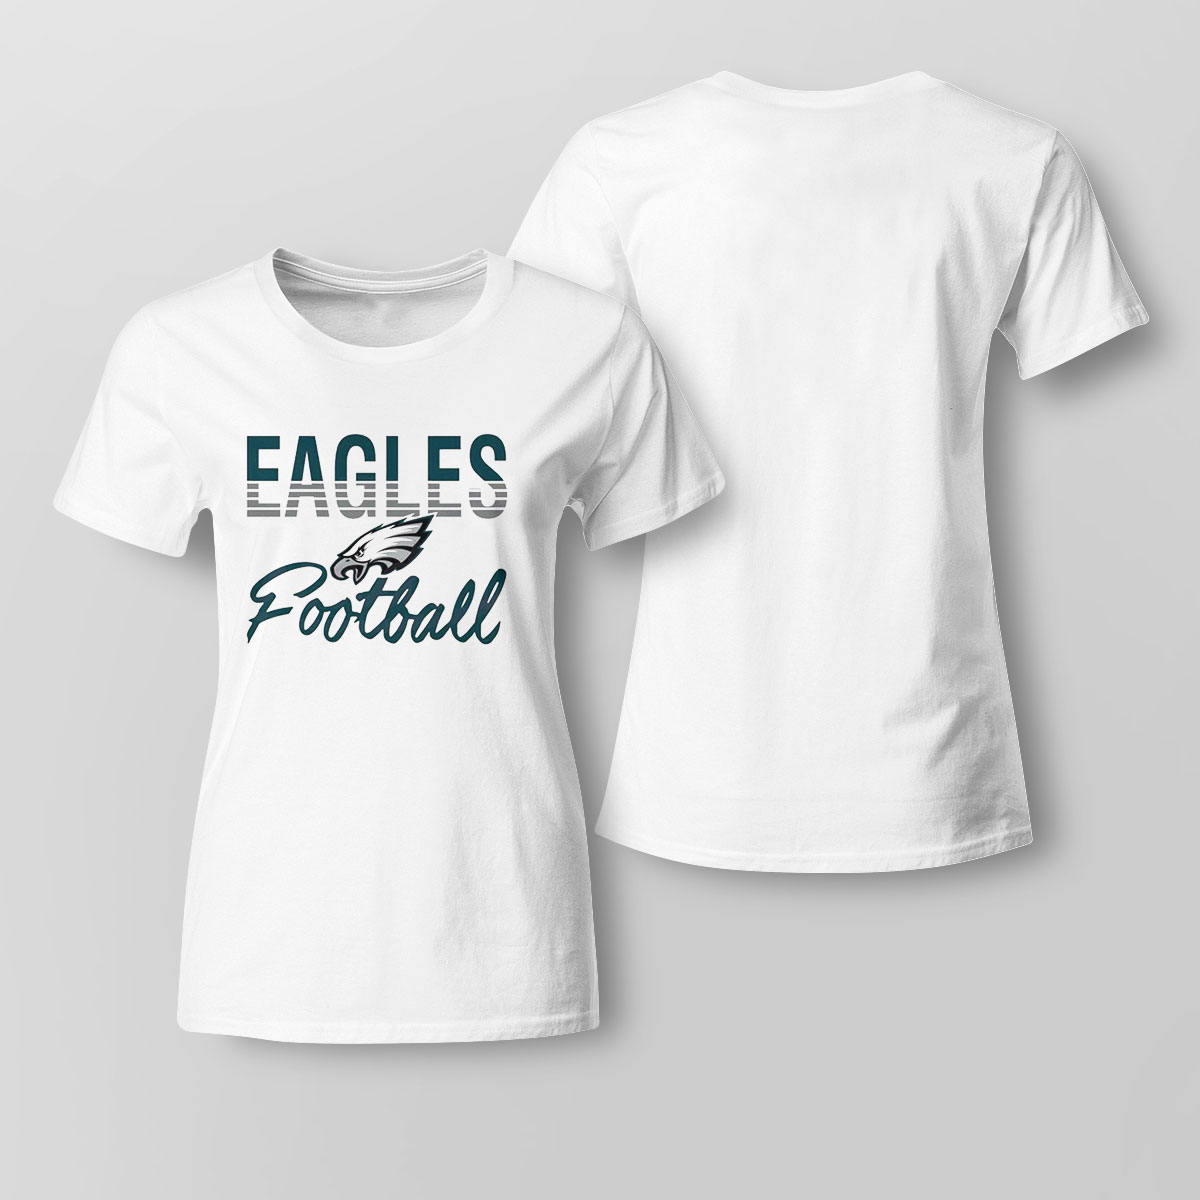 Long printed T-shirt - Dark grey/Philadelphia Eagles - Ladies